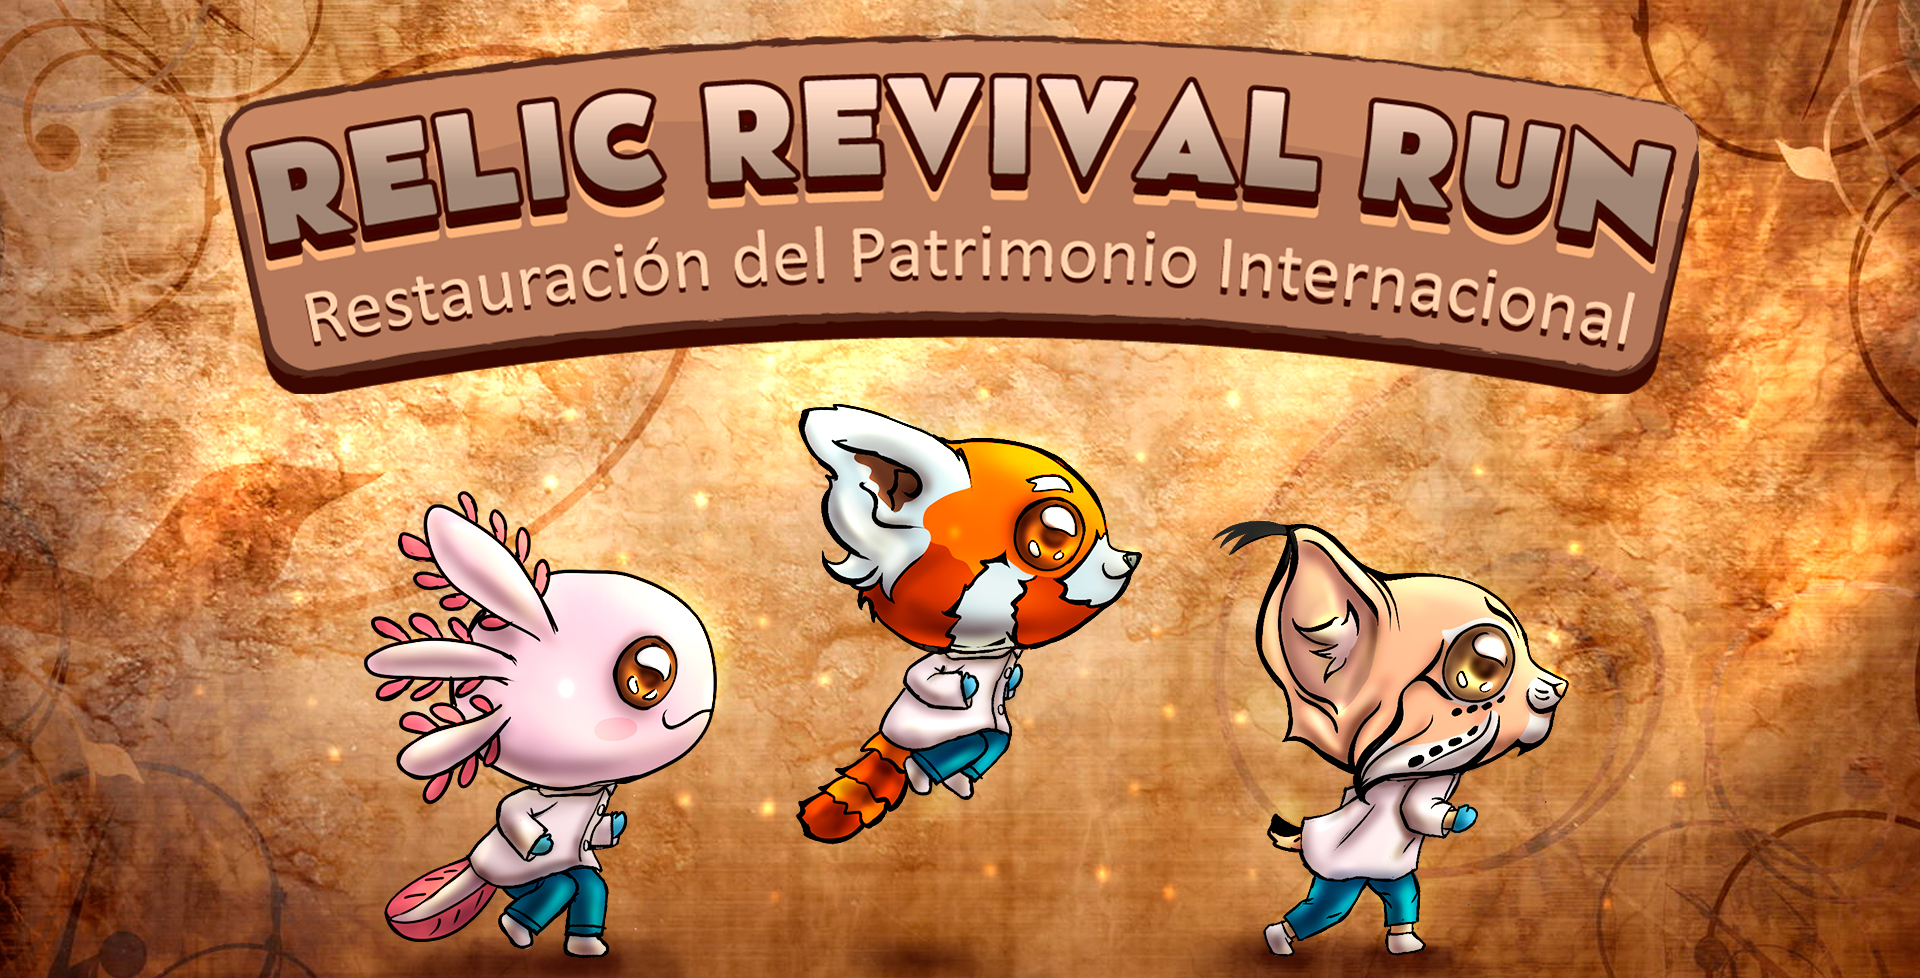 Relic Revival Run